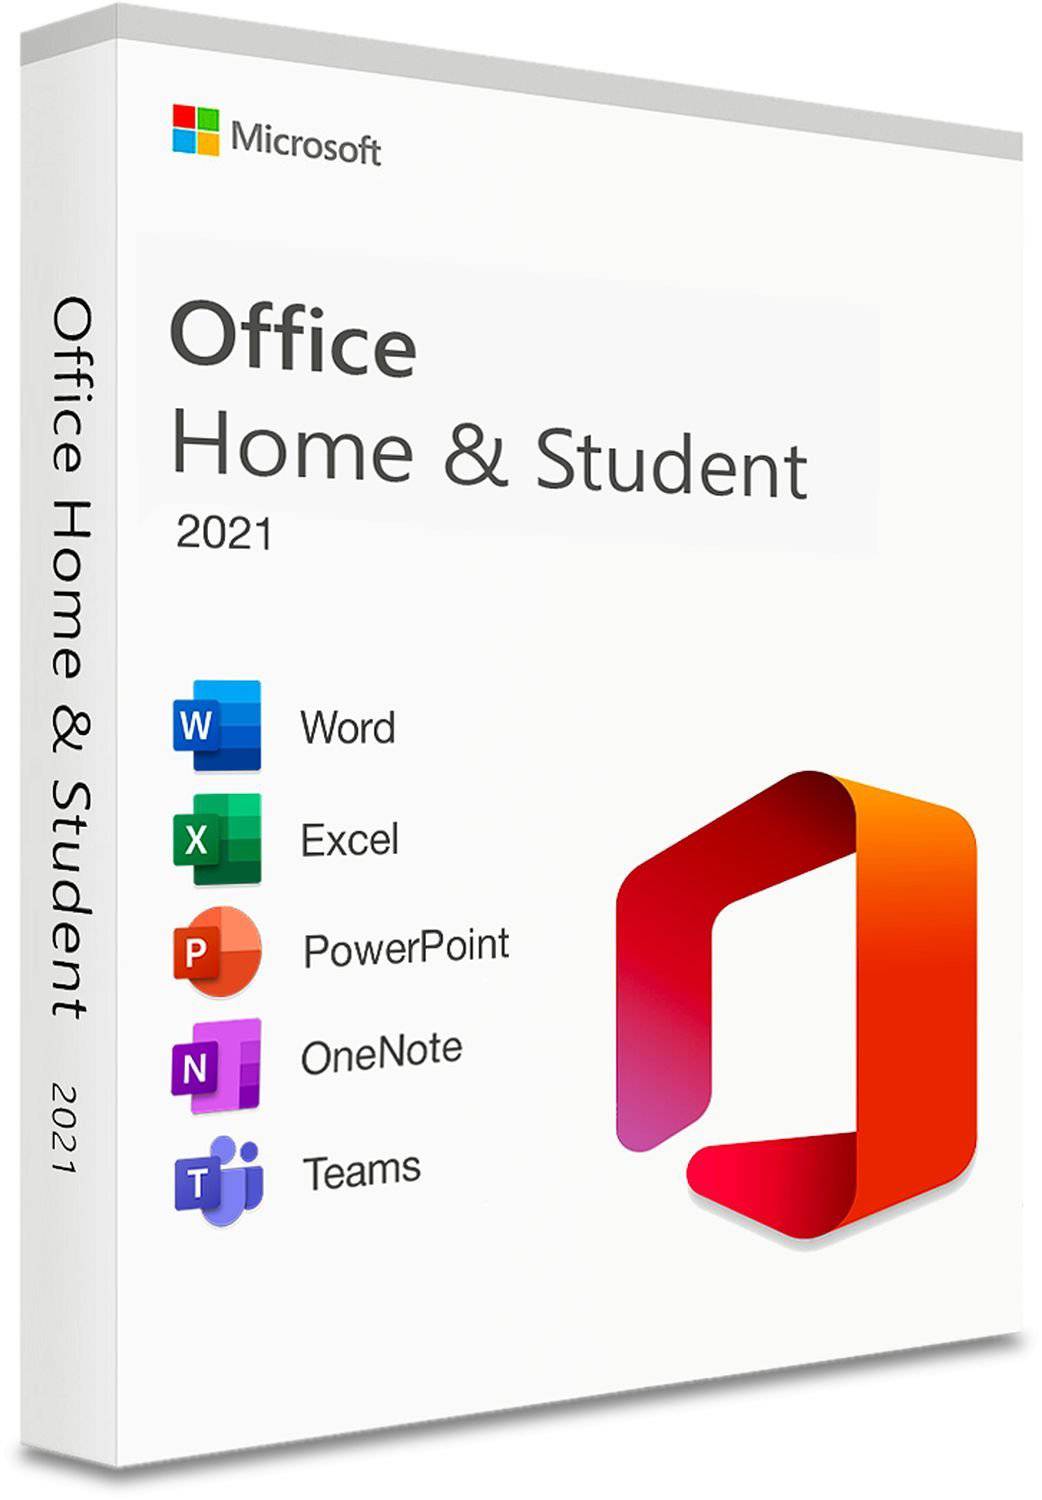 Microsoft Office 2021 Home & Student | Full Version | Genuine Lifetime License for 1 PC or MAC | Australian Stock - INFINITE-ITECH